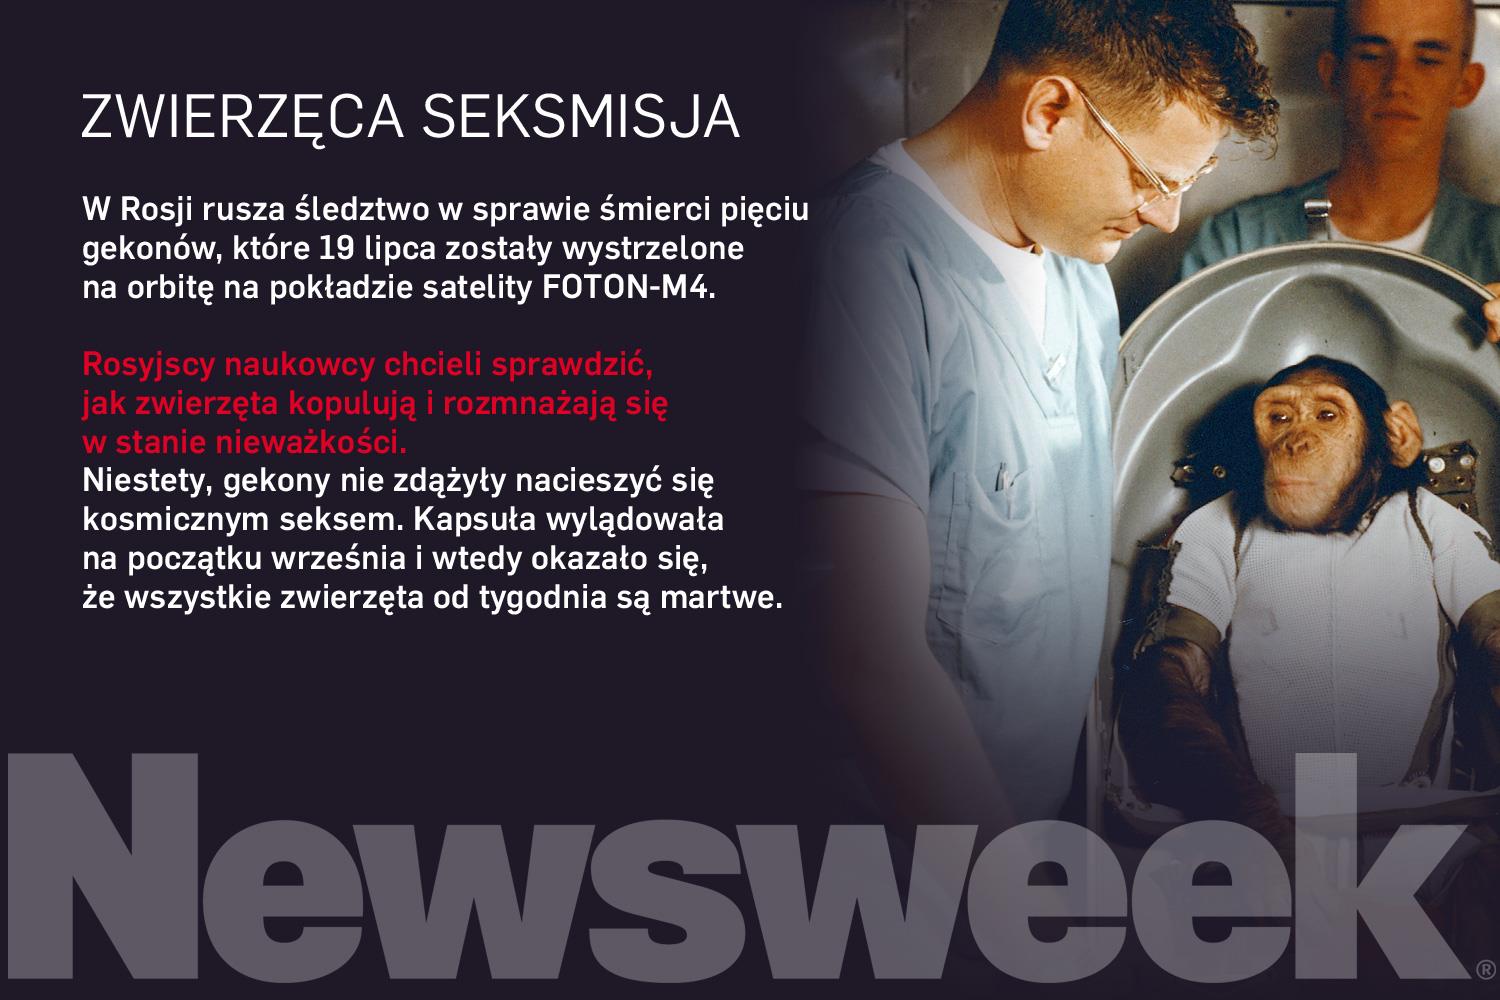 Newsweek 38/2014 galeria promo